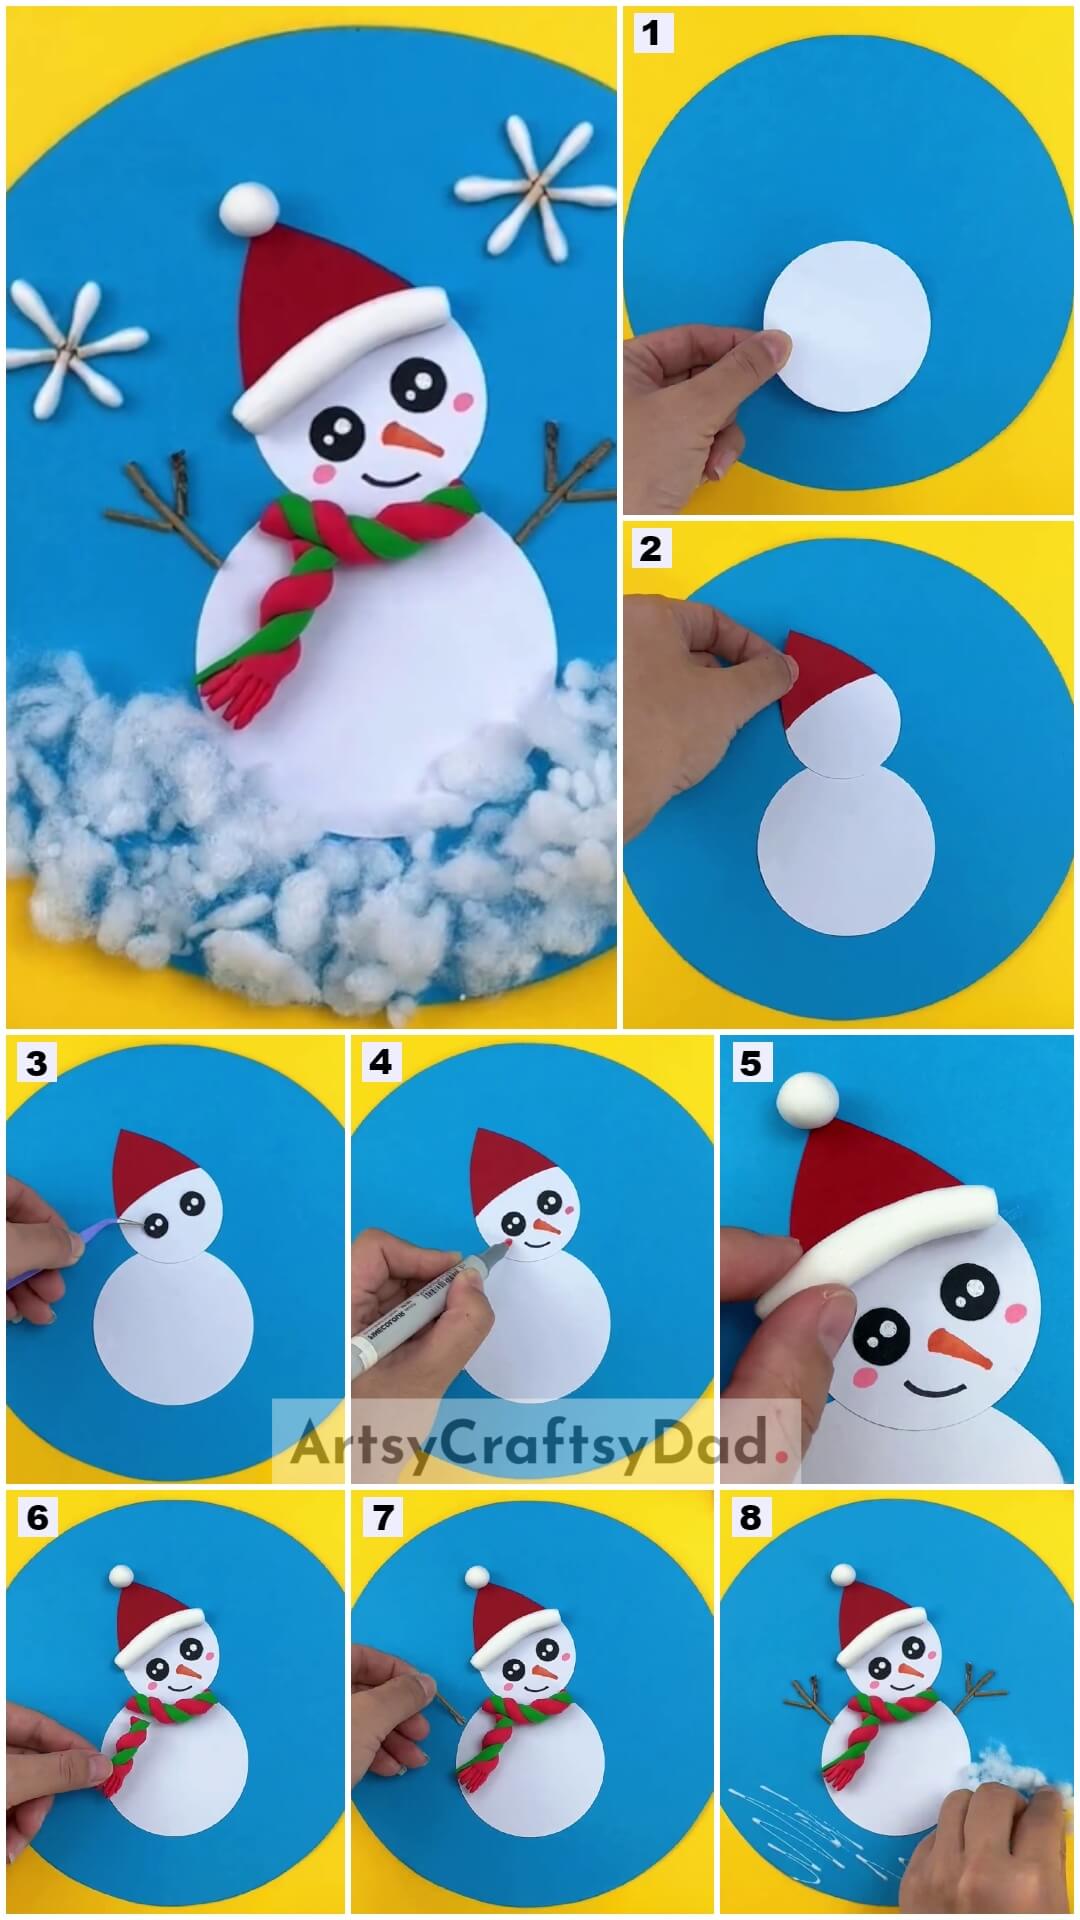 DIY Paper Snowman Craft Tutorial Using Cotton Buds